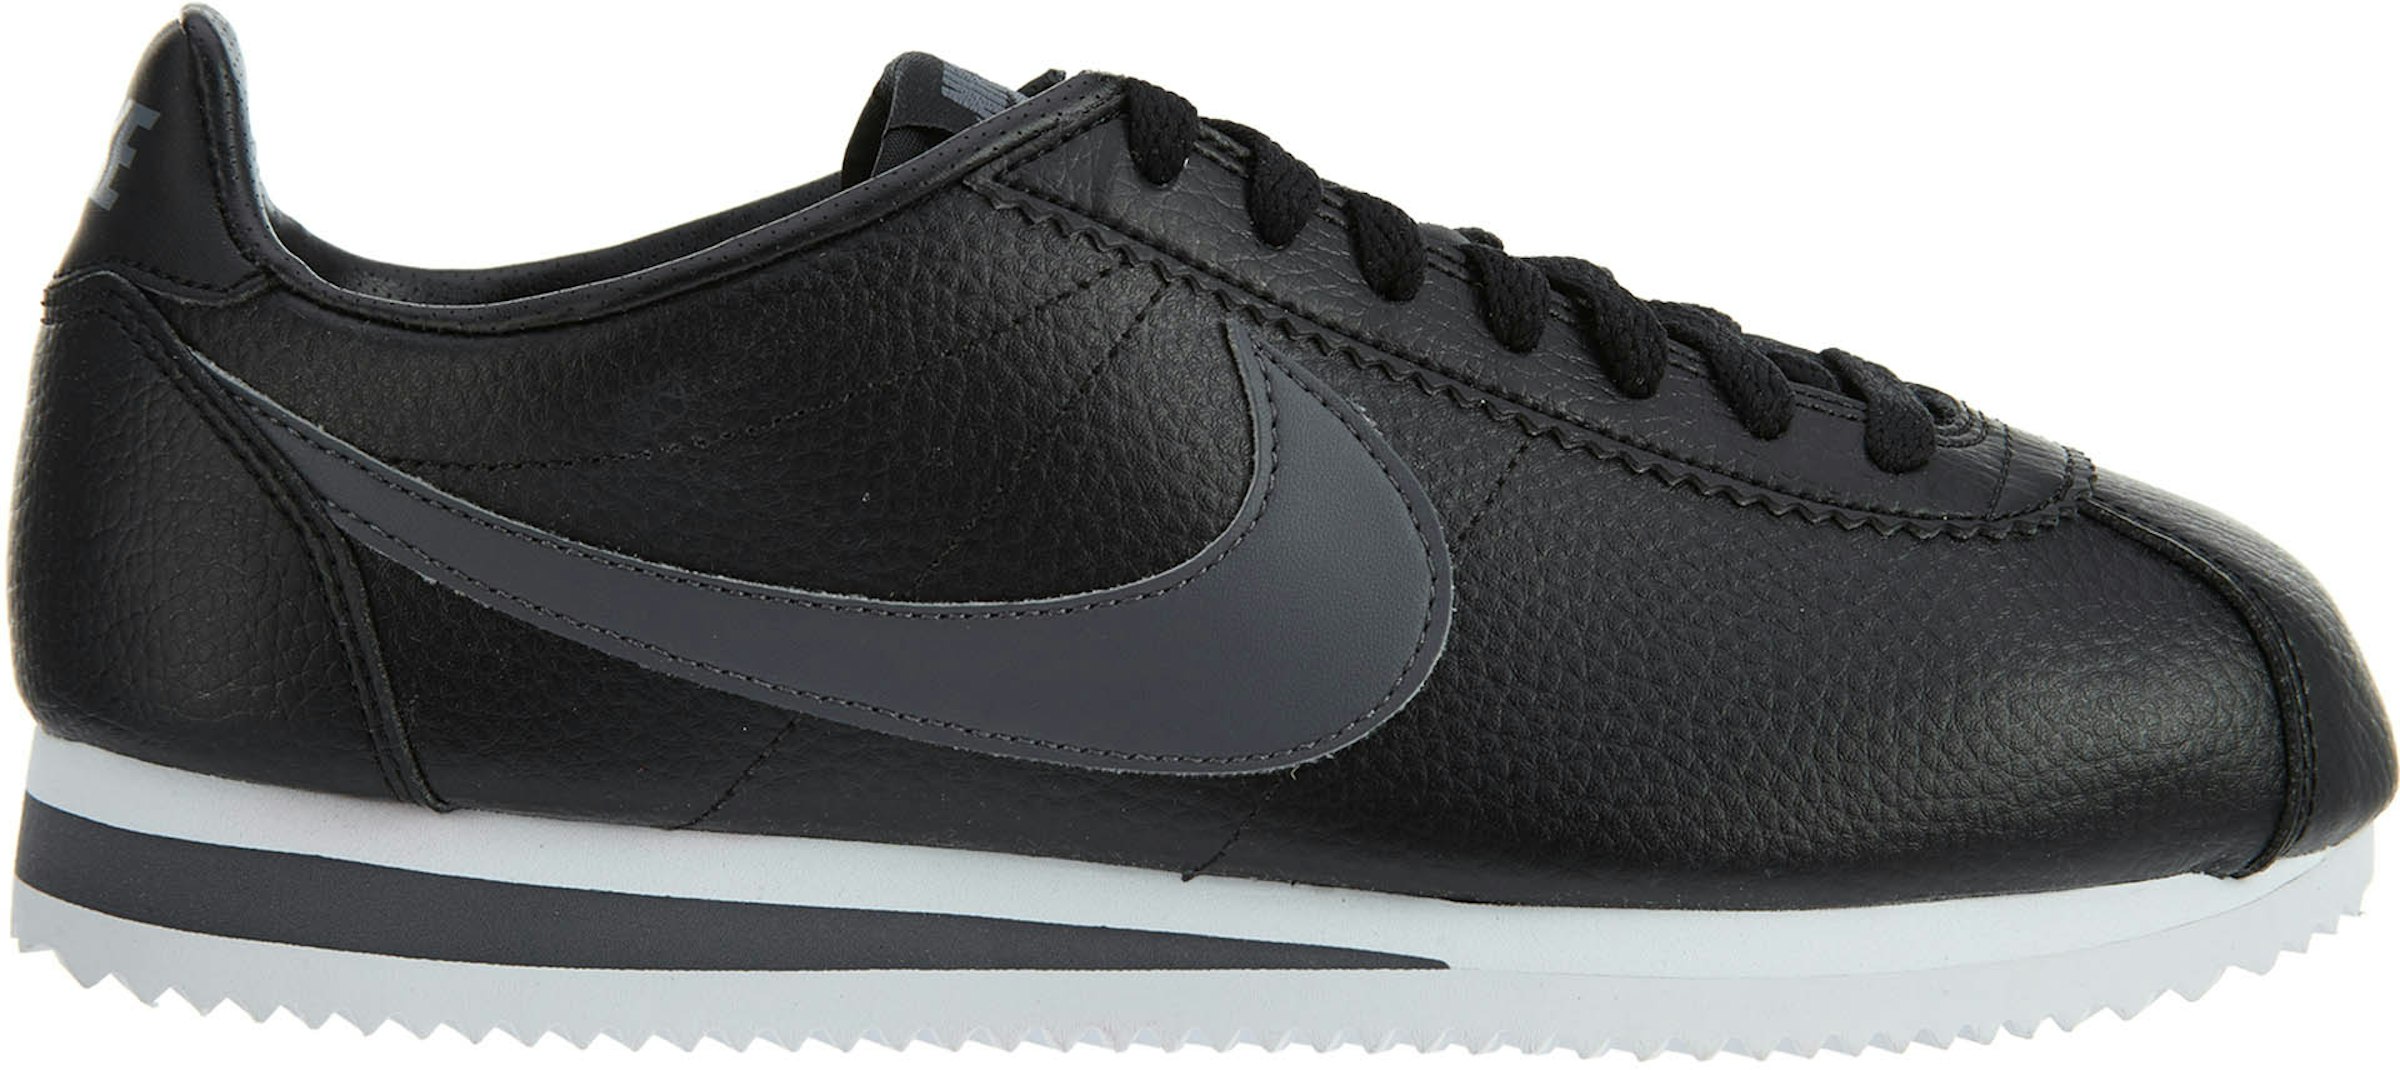 Nike Classic Cortez Leather Black/Dark Grey-White Men's - 749571-011 -